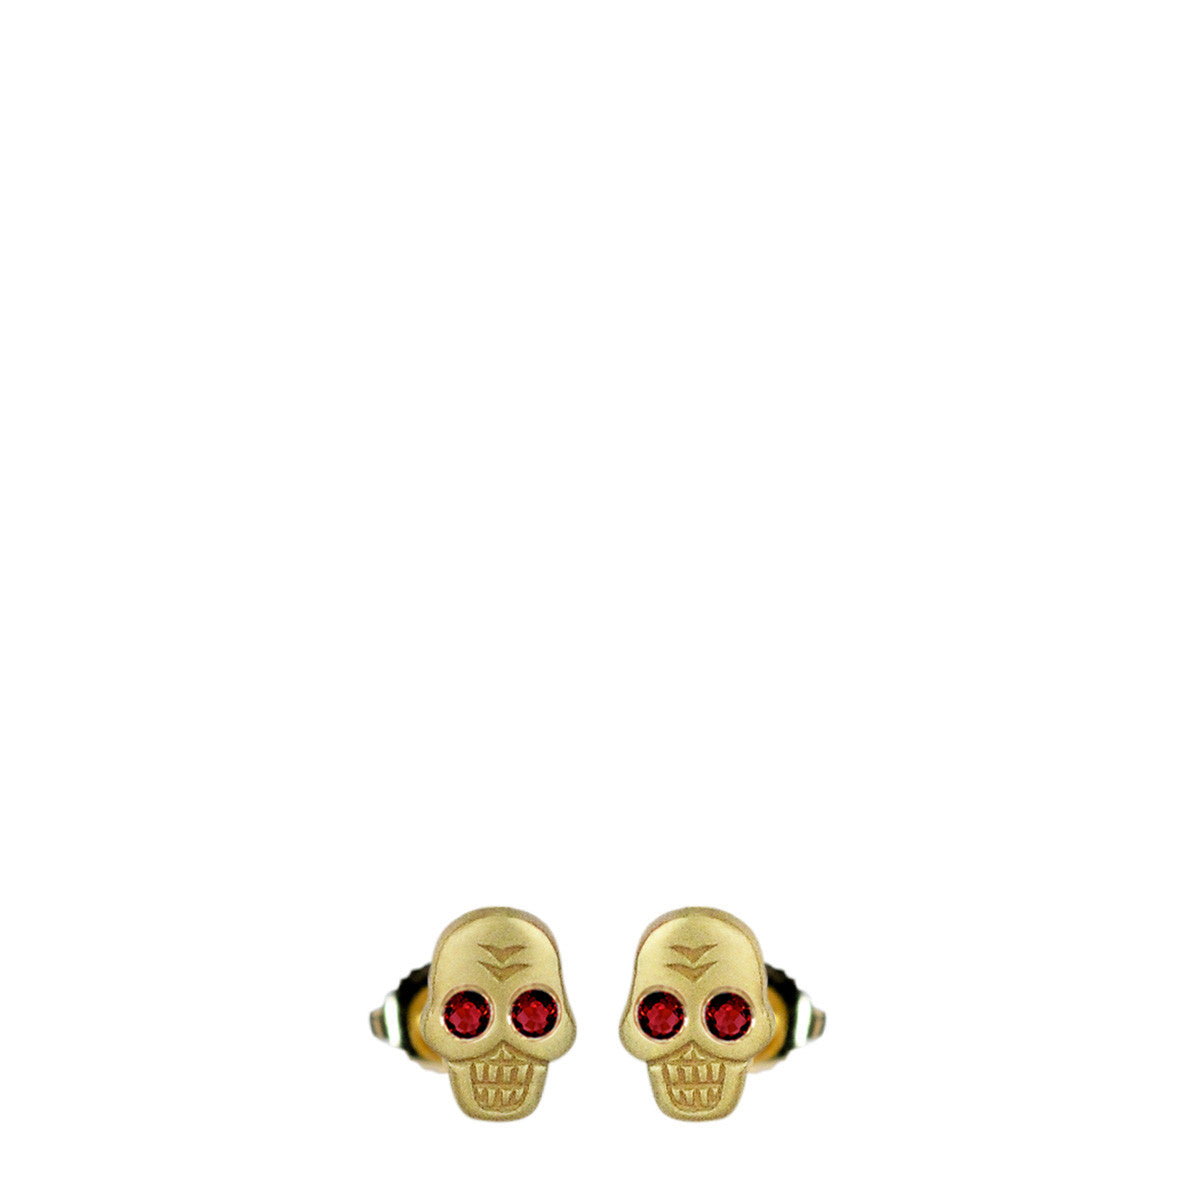 18K Gold Mini Skull Stud Earrings with Ruby Eyes